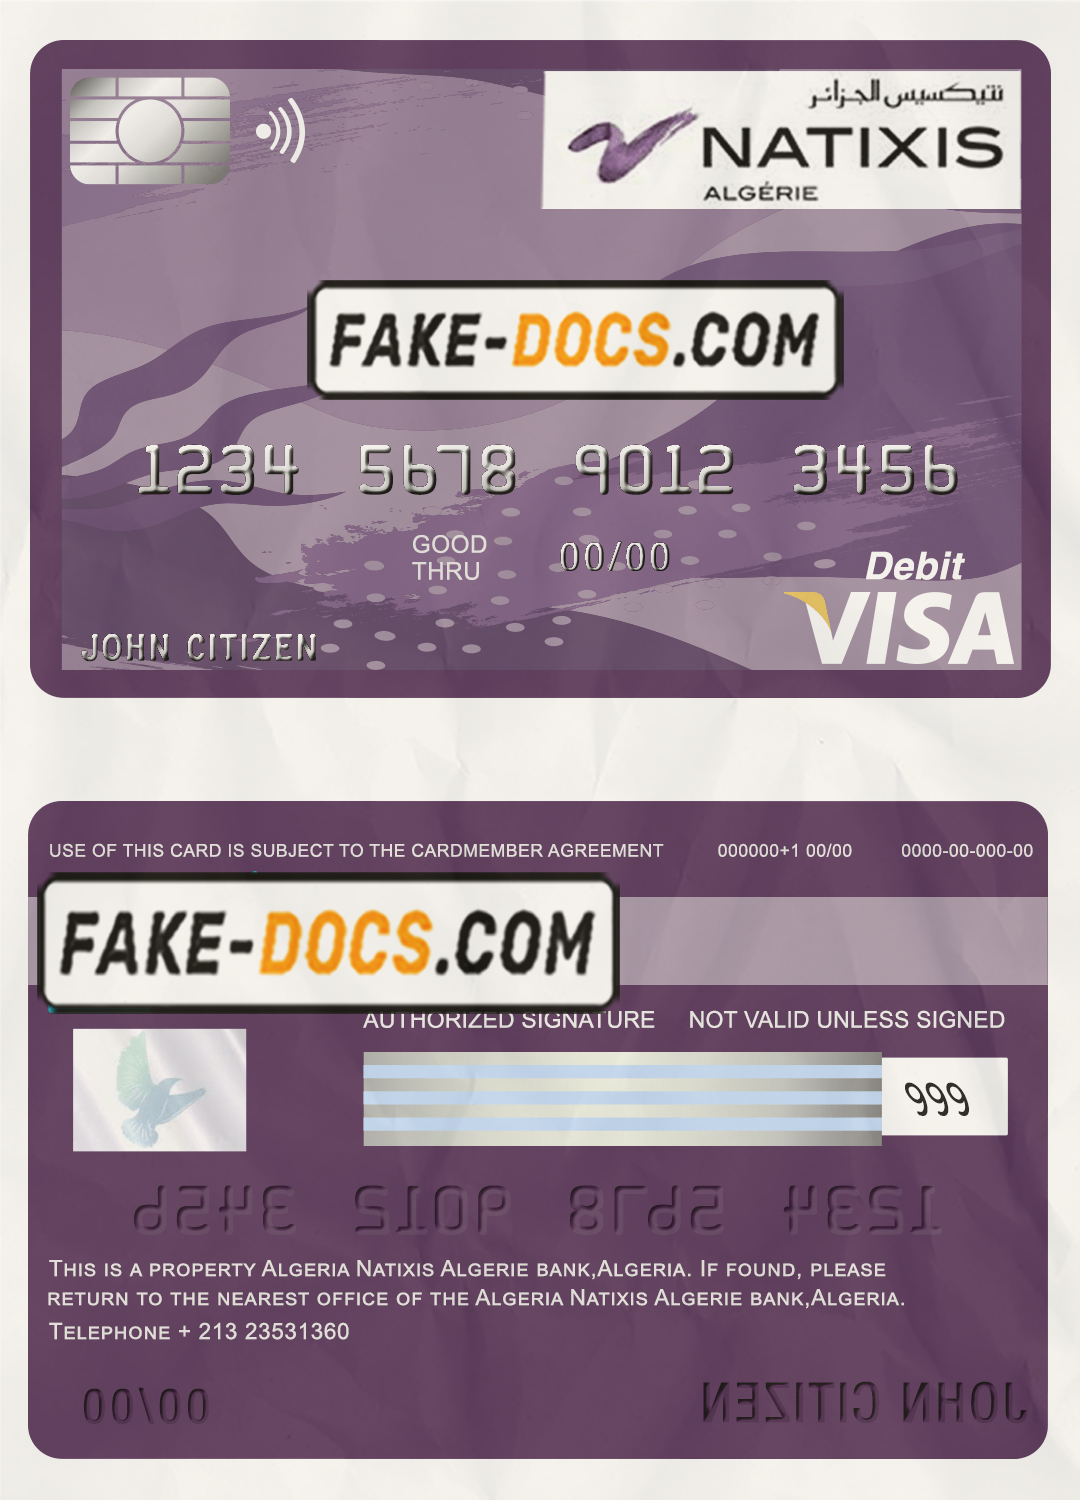 Algeria Natixis Algerie bank visa card debit card template in PSD format, fully editable scan